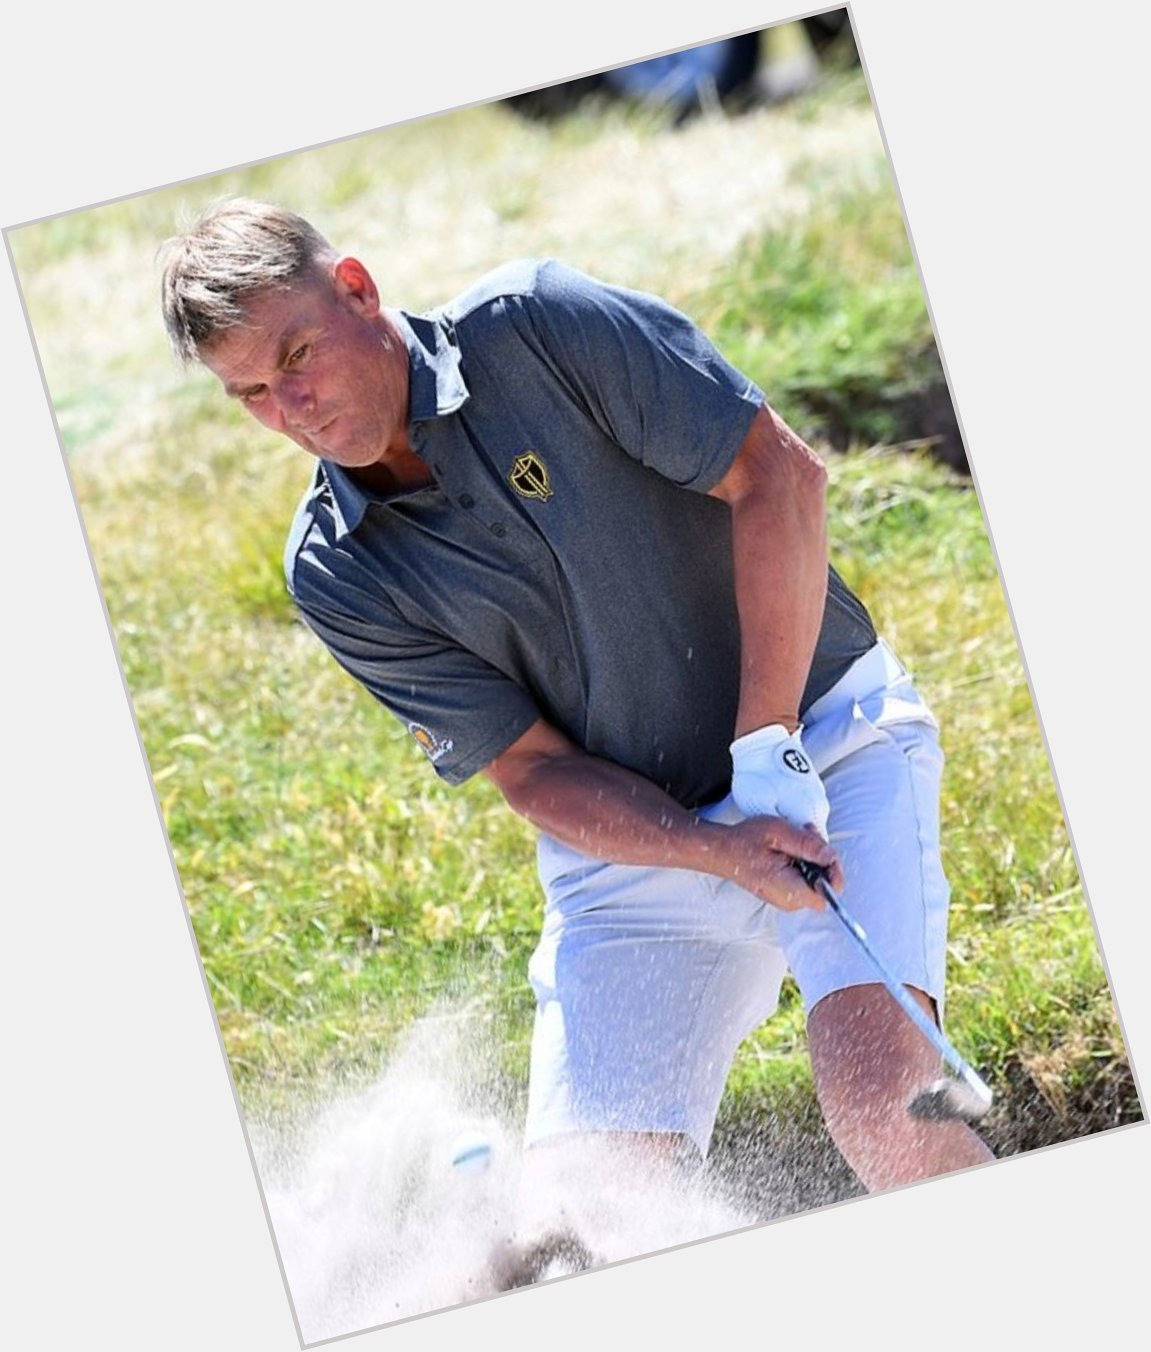 Happy Birthday American professional golfer John Daly 55 today. 